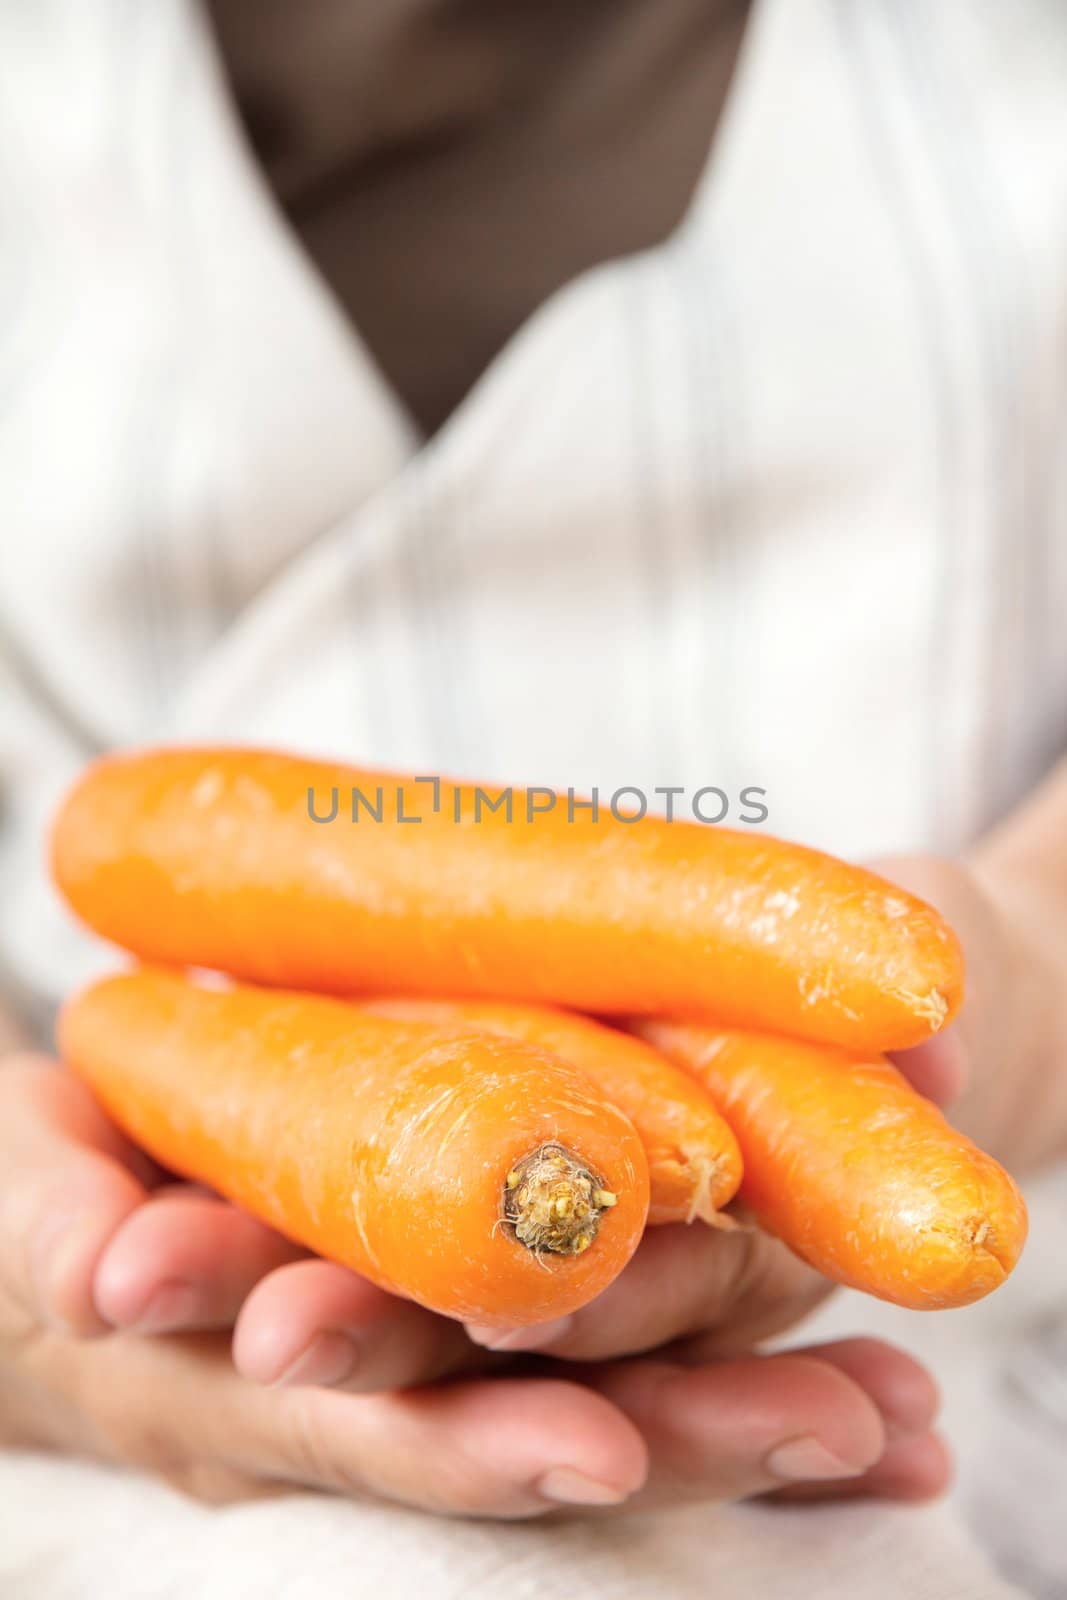 hand holding carrot